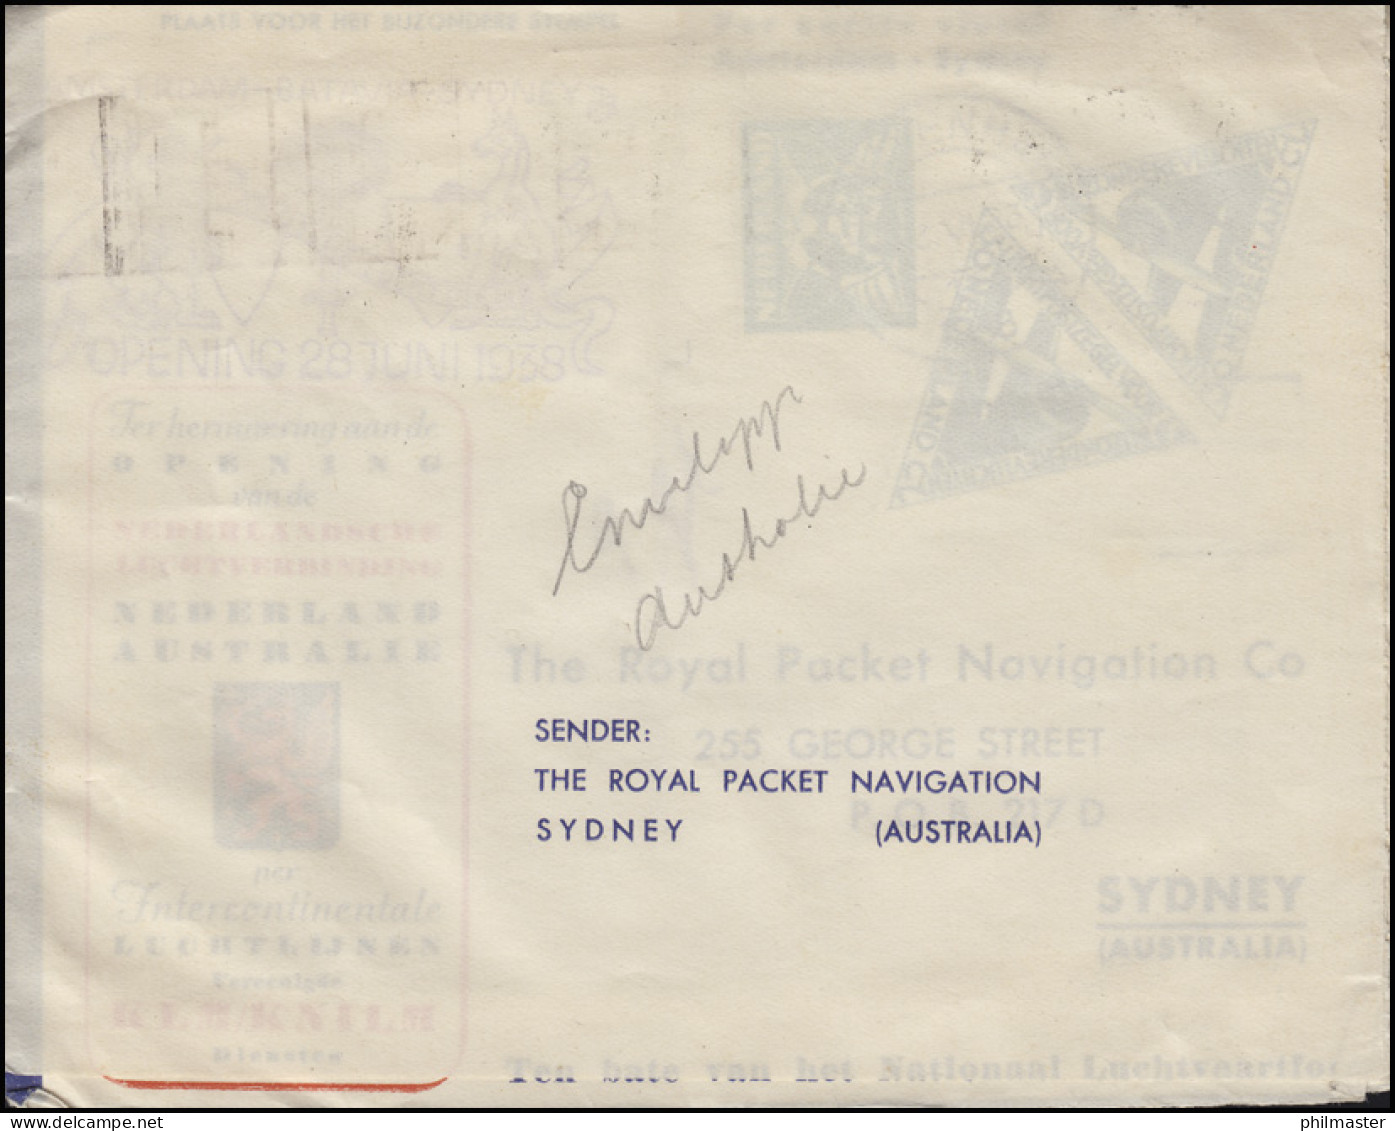 Erstflug Amsterdam - Batavia - Sydney 28.6.1938 Brief MiF S'GRAVENHAGE 23.6.38 - Luftpost